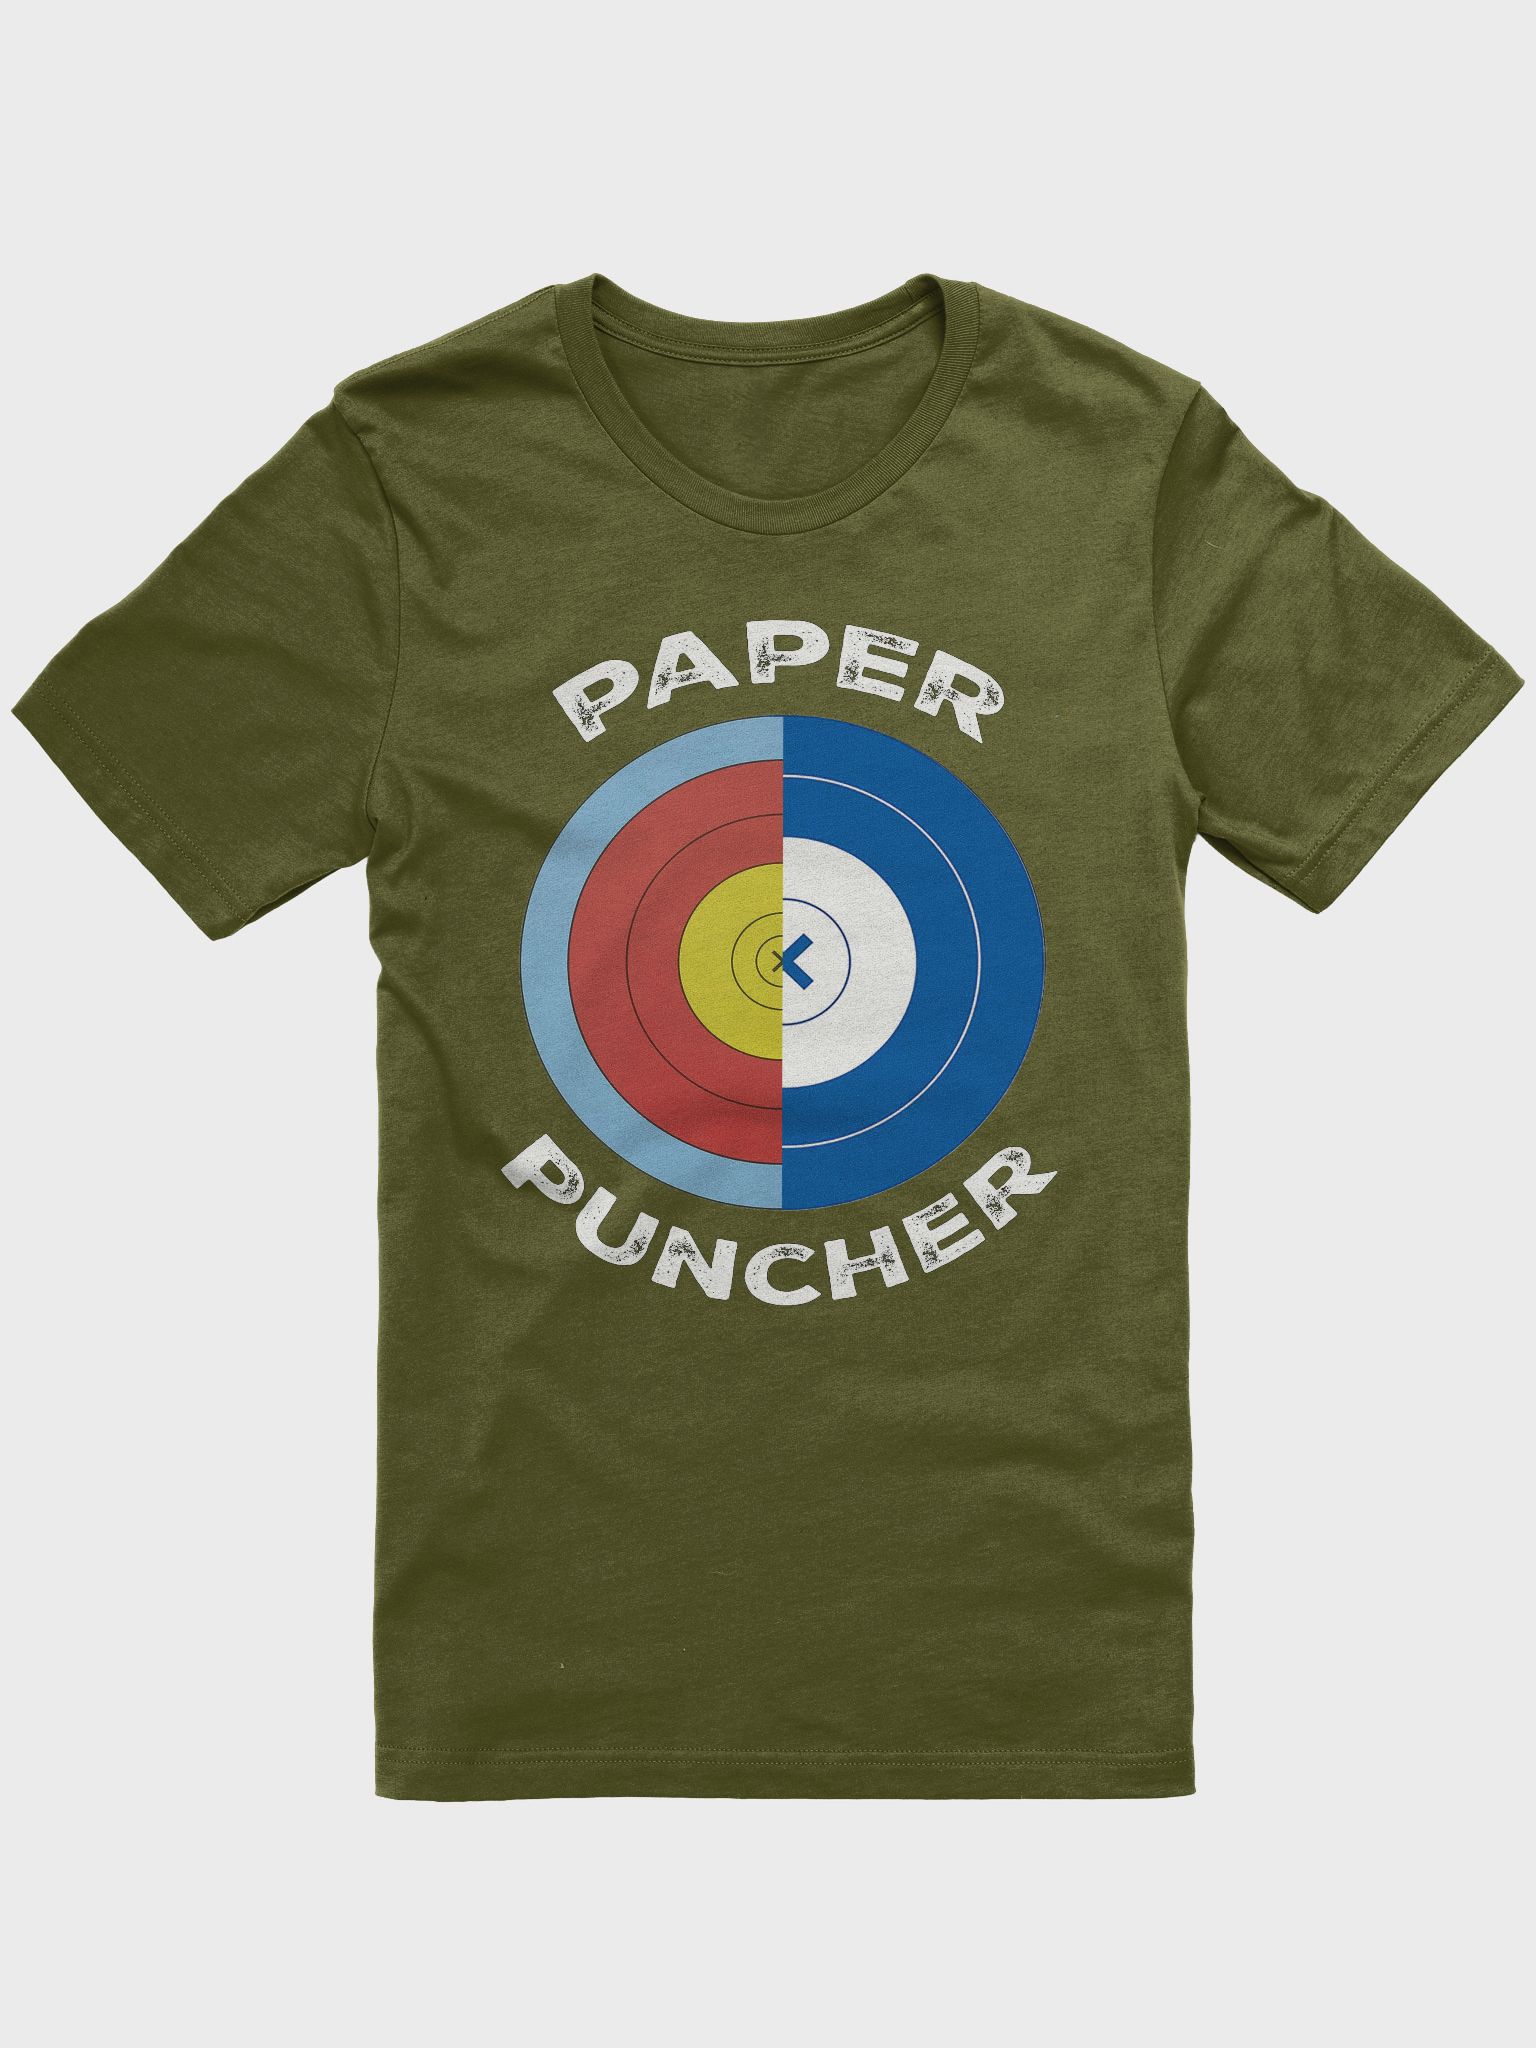 Paper Puncher - Koonje, LLC